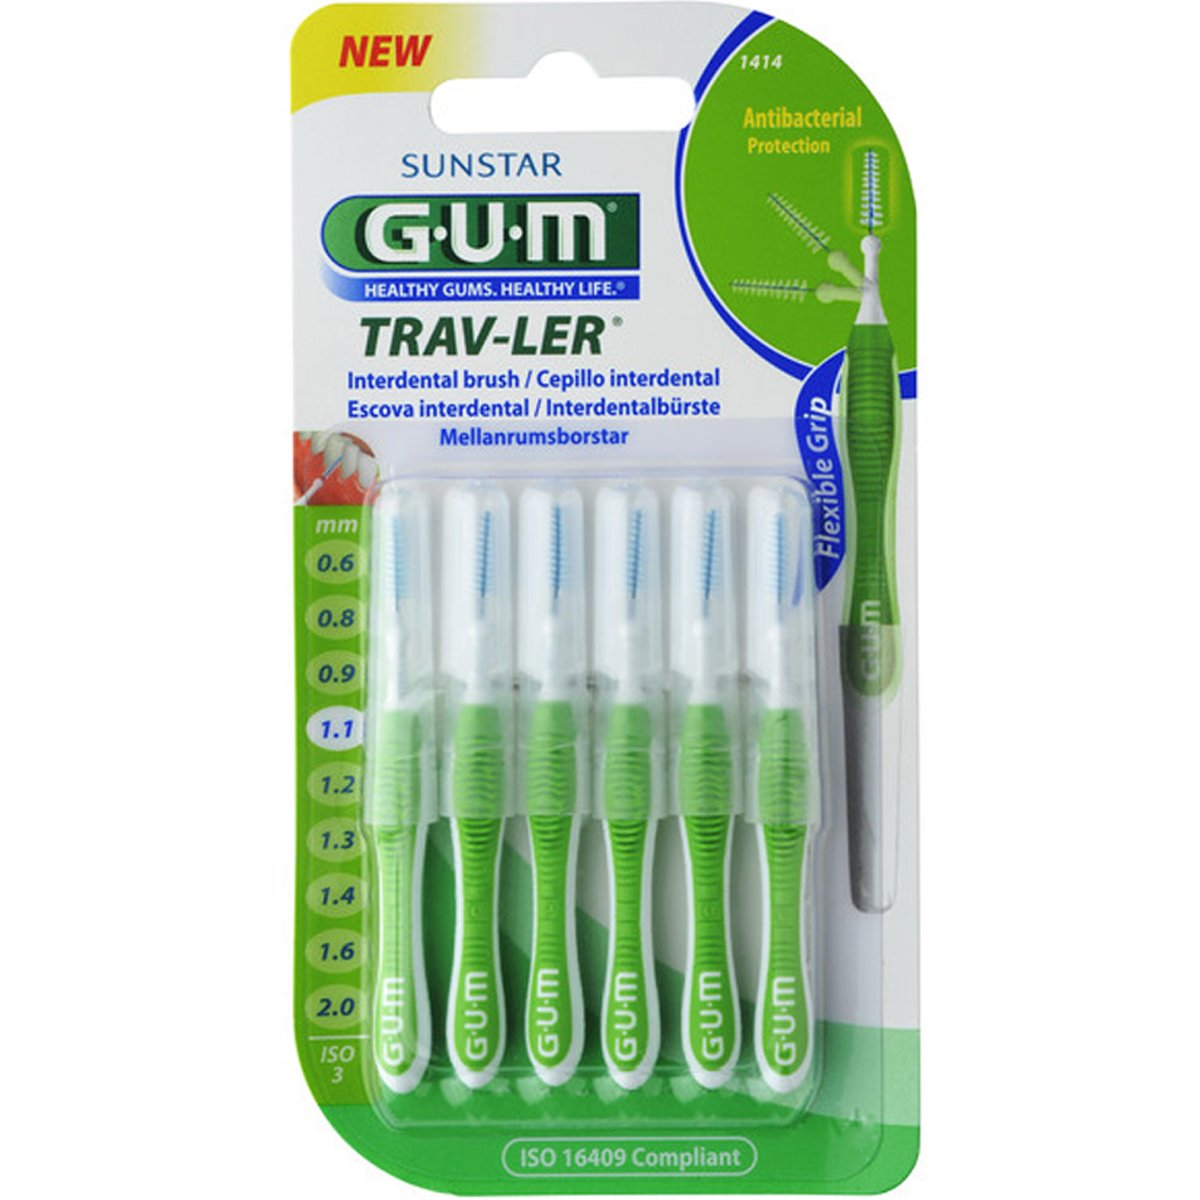 Gum Trav-Ler Interdental Brush Μεσοδόντια Βουρτσάκια για Εύκολο & Καθημερινό Καθαρισμό Ανάμεσα στα Δόντια 6 Τεμάχια – 1.1